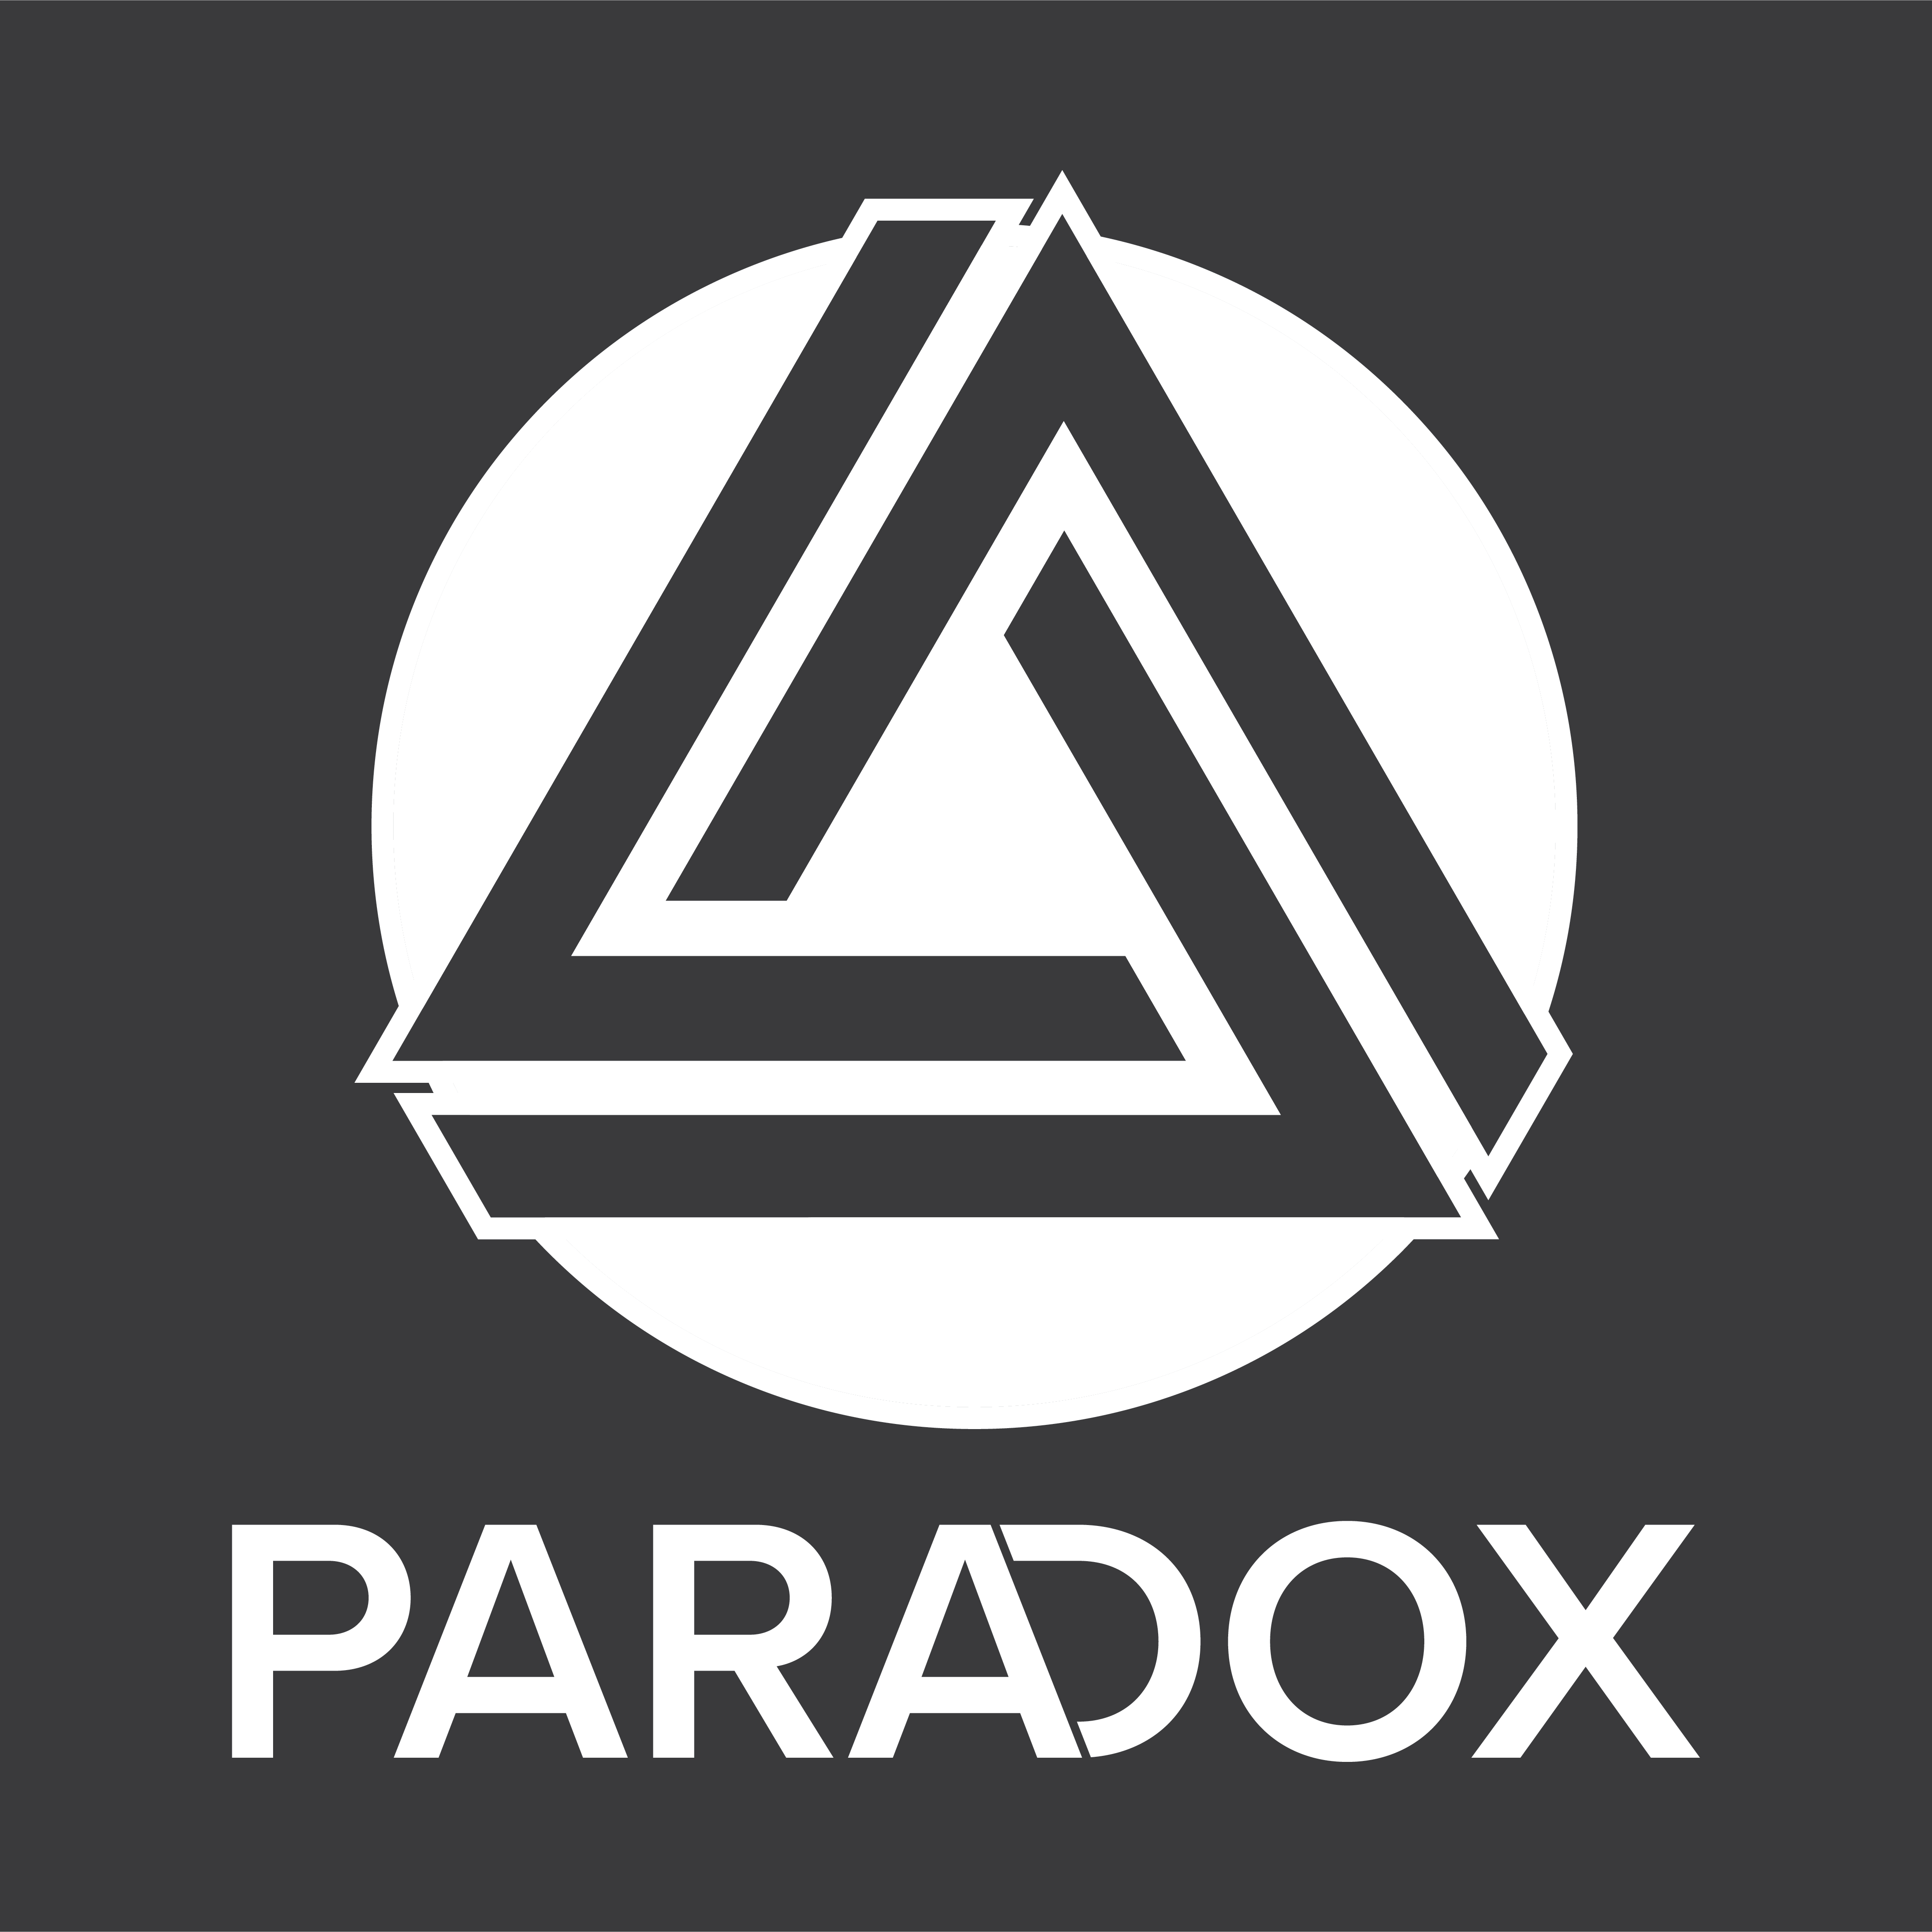 Paradox - PC: Rainbow Six Siege - 4167 x 4168 png 340kB